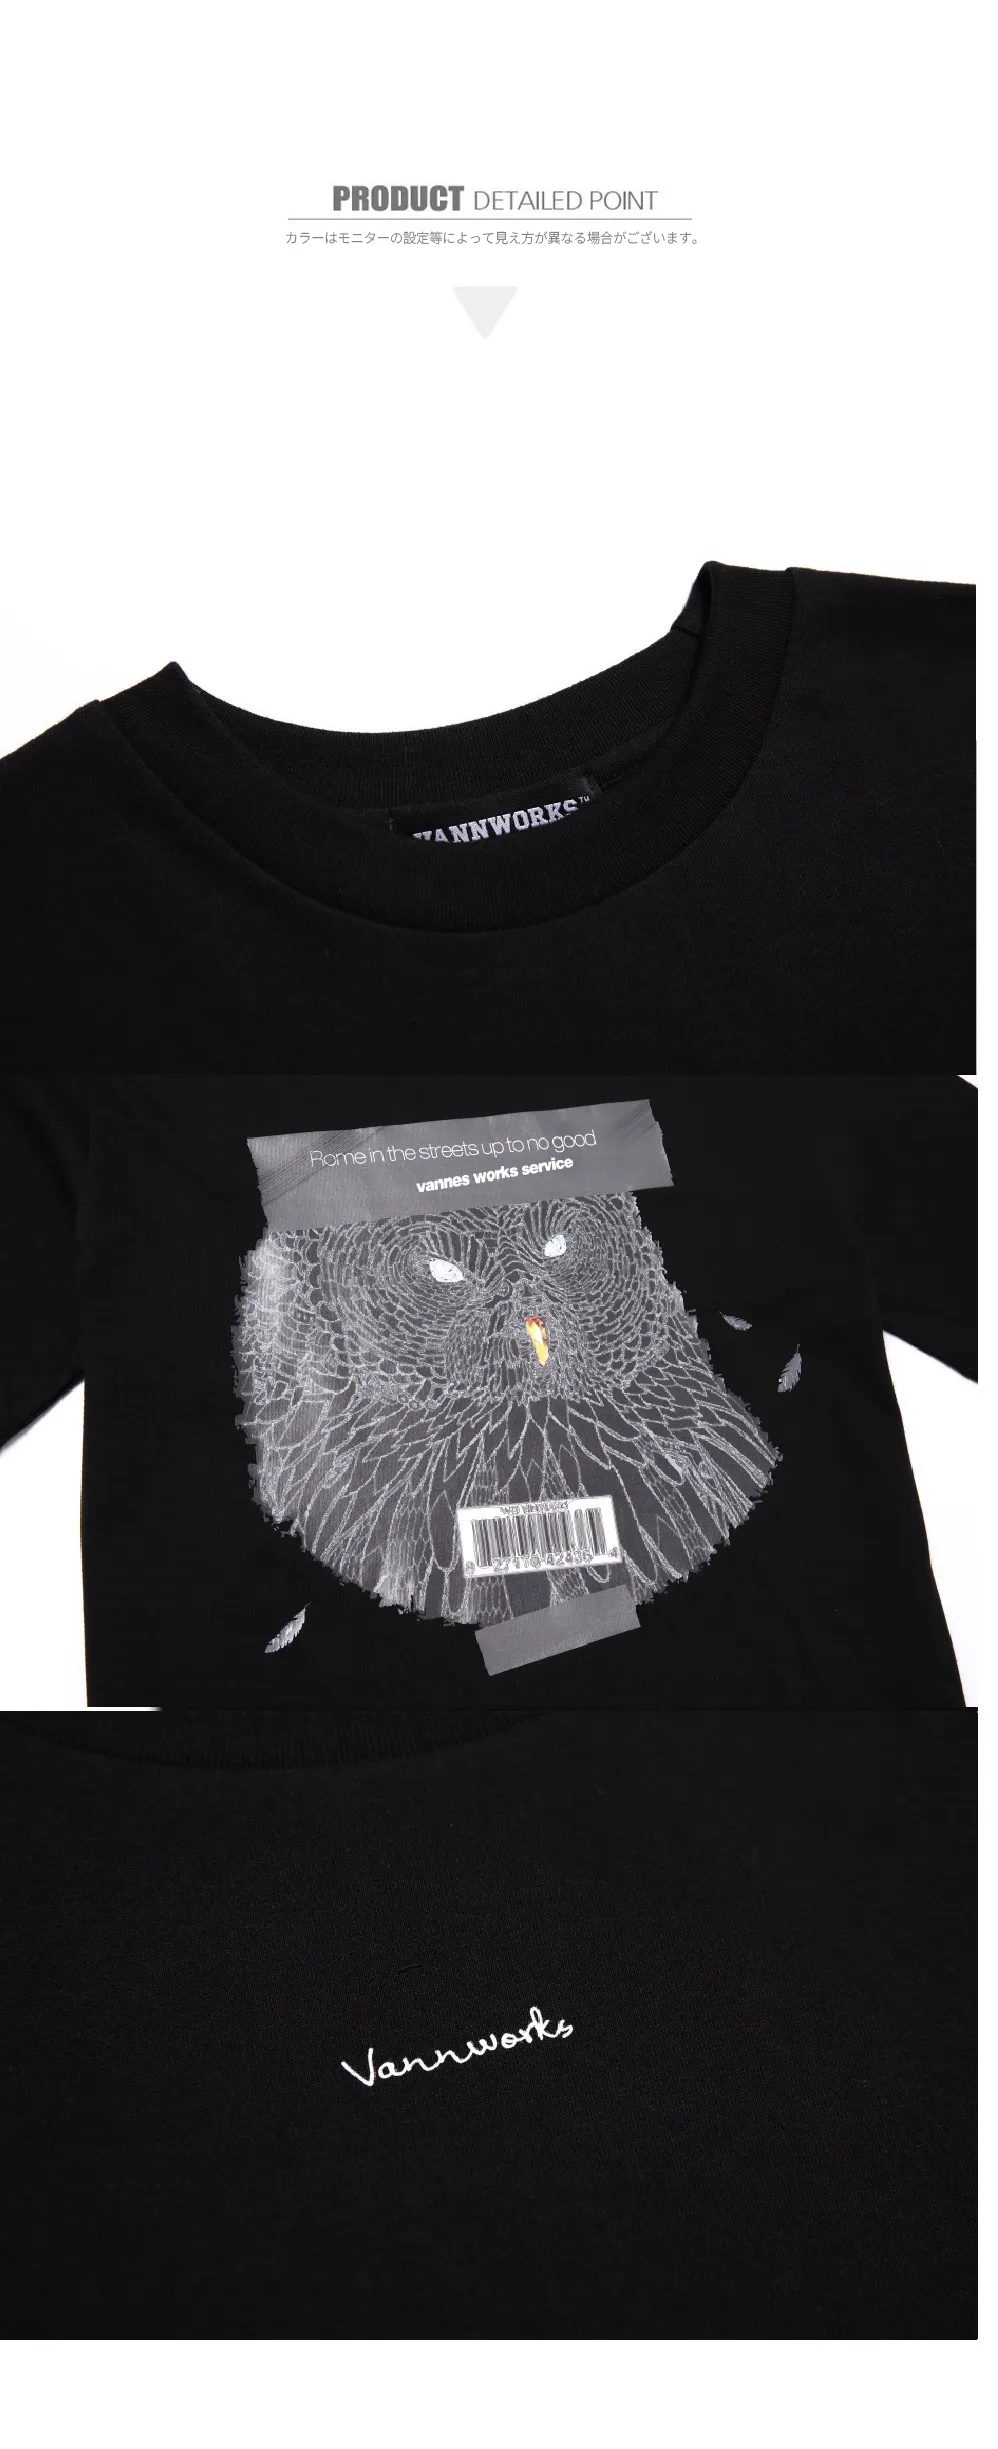 *VANNWORKS*OWL Tシャツ(VNAHTS111)ネイビー | 詳細画像5